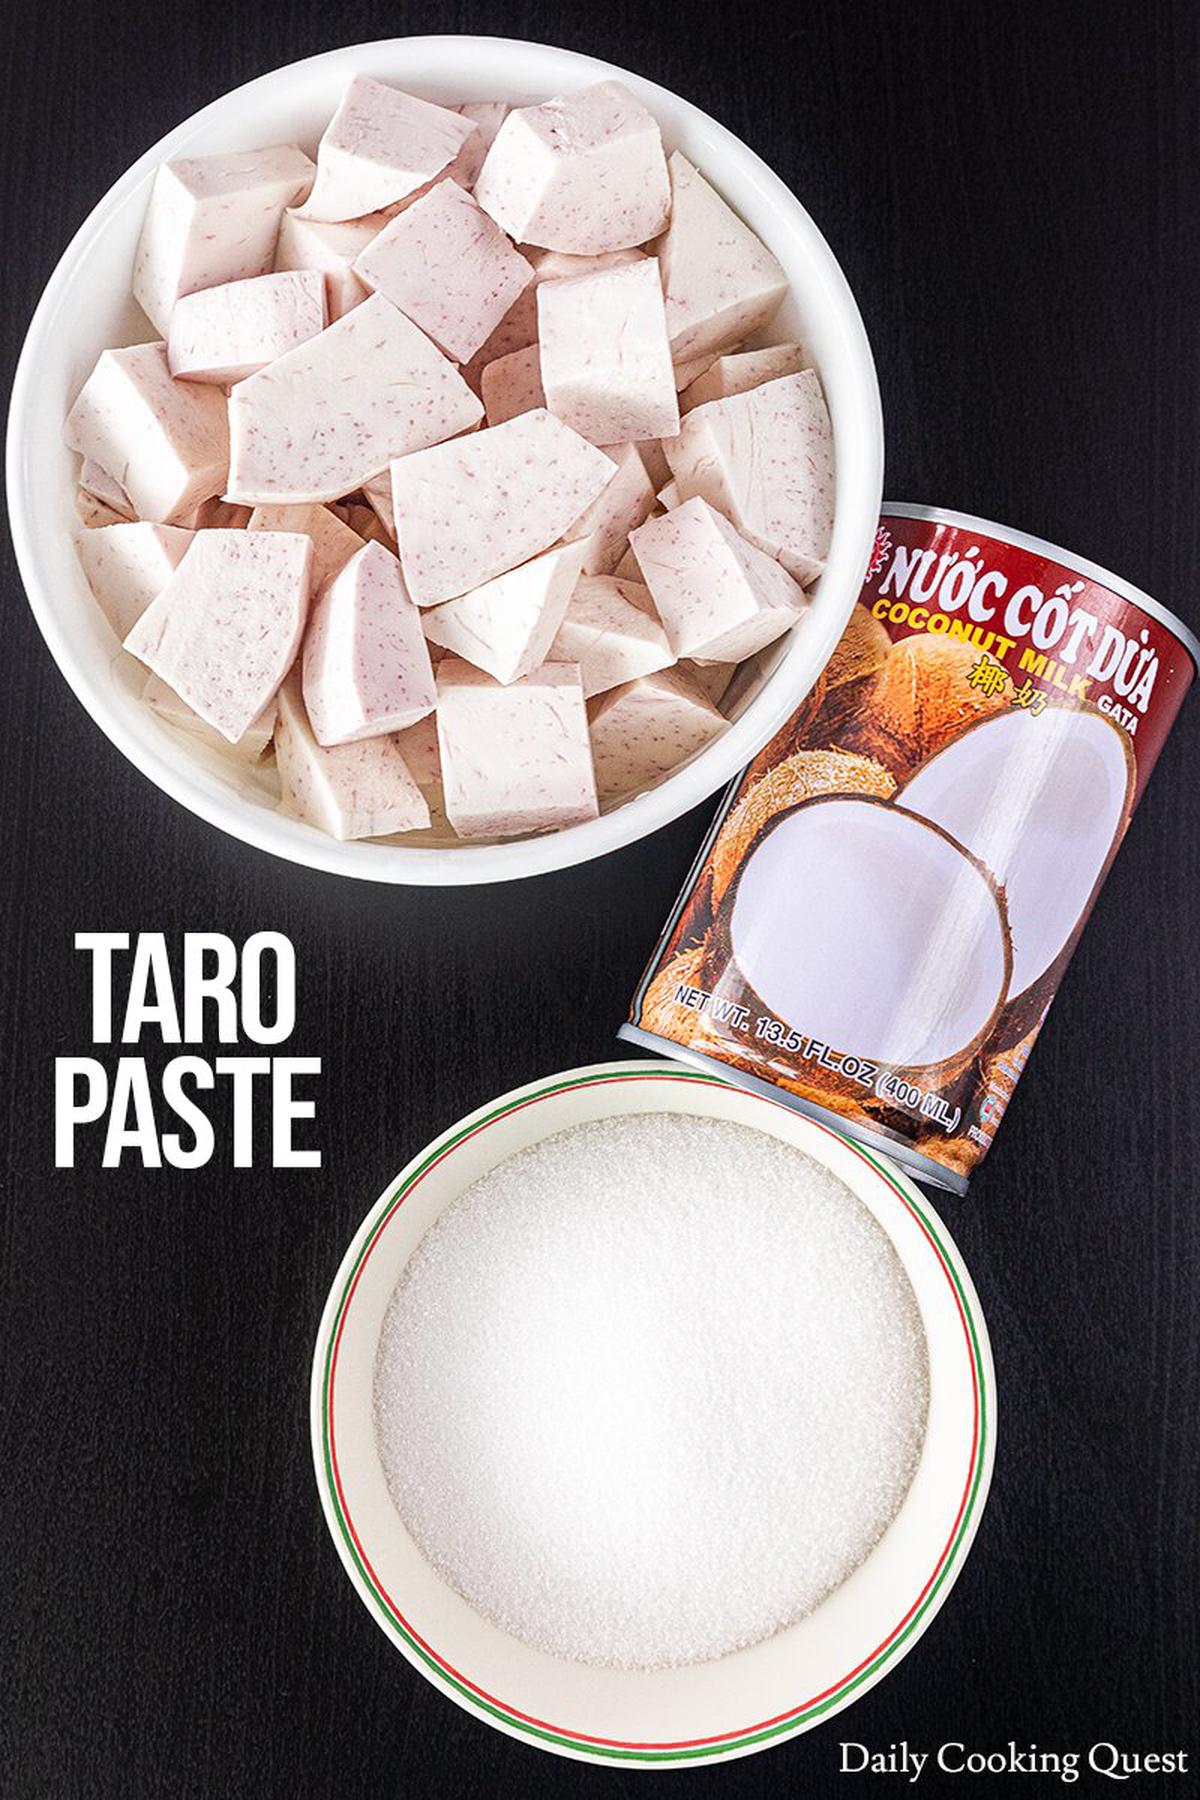 Ingredients to Prepare Taro Paste: Taro, Coconut Milk, and Sugar.